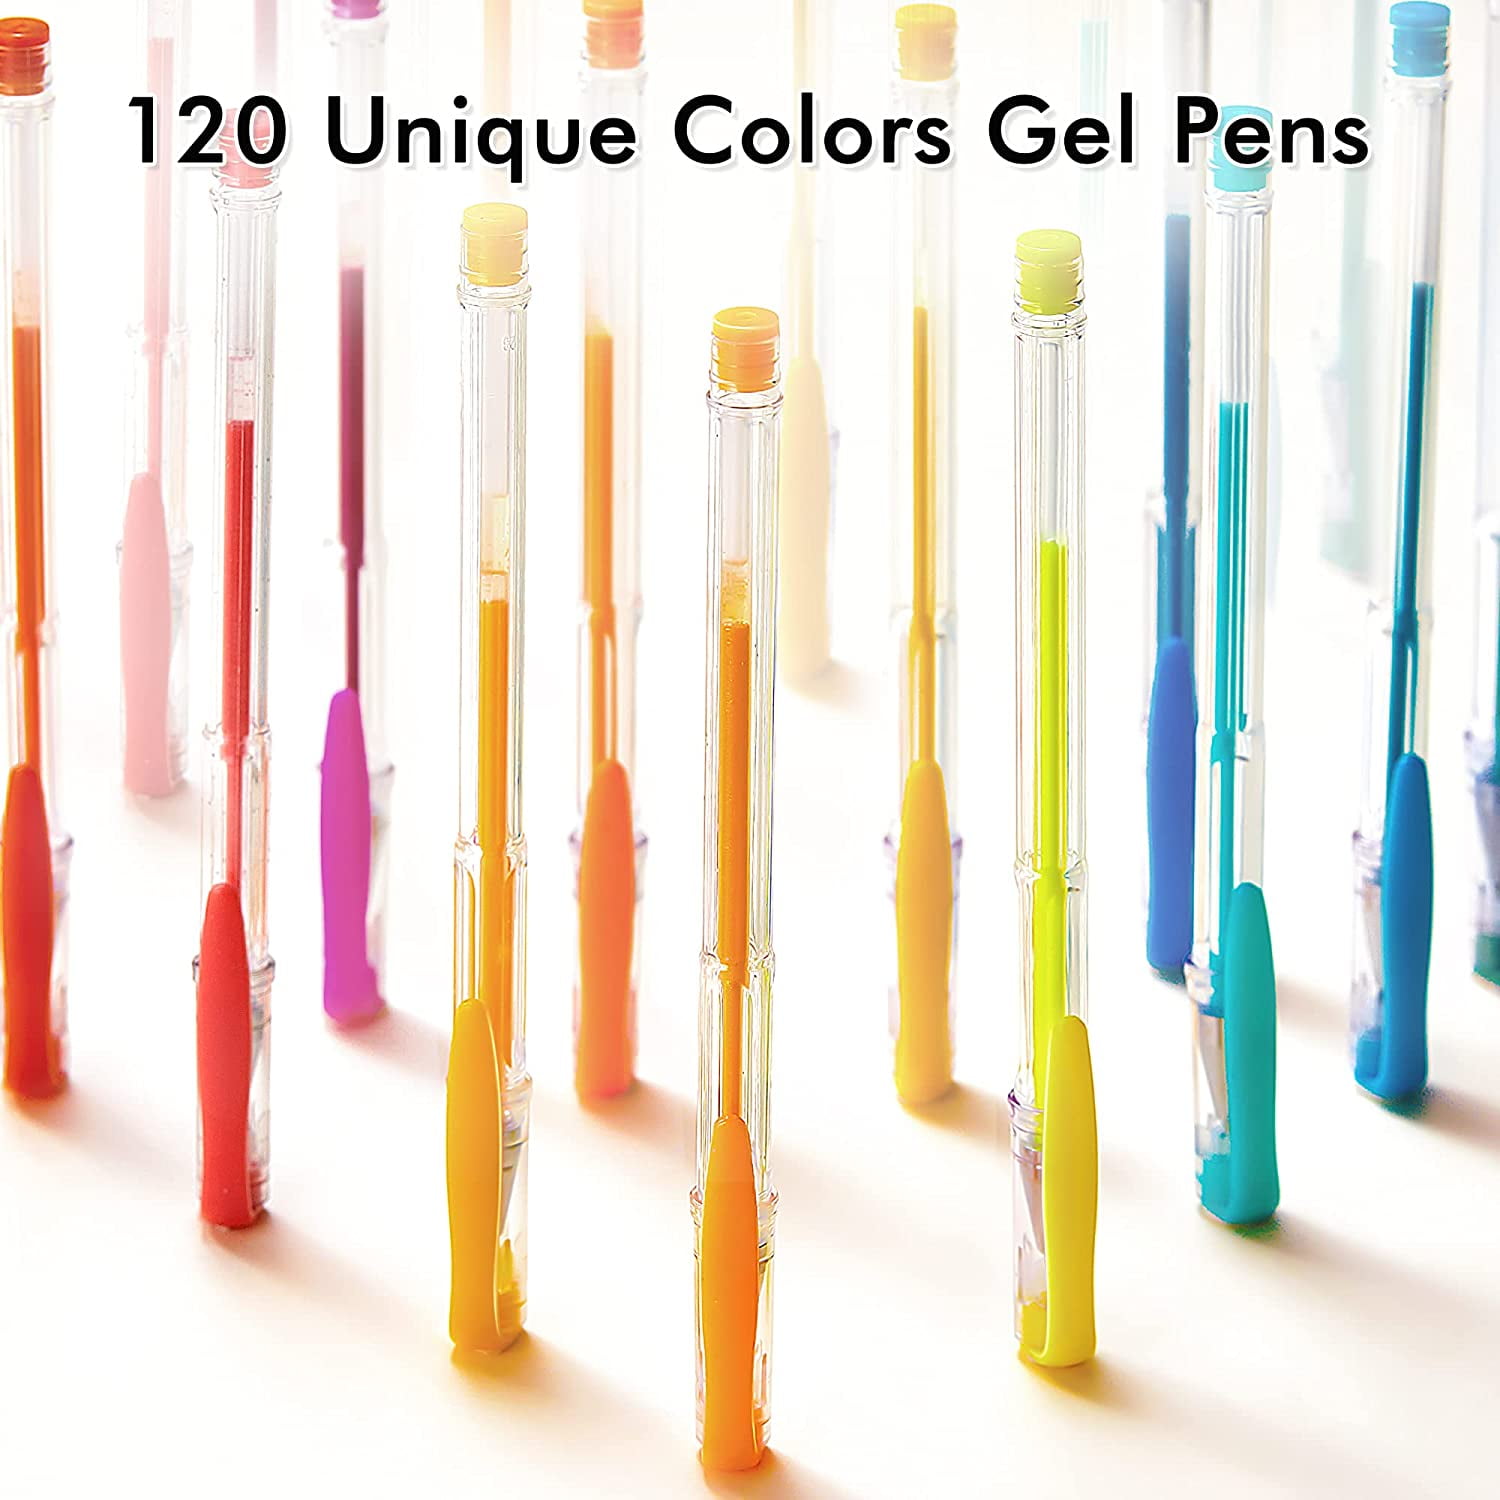 Colored Erasable Gel Pens - Set of 12 — Shuttle Art